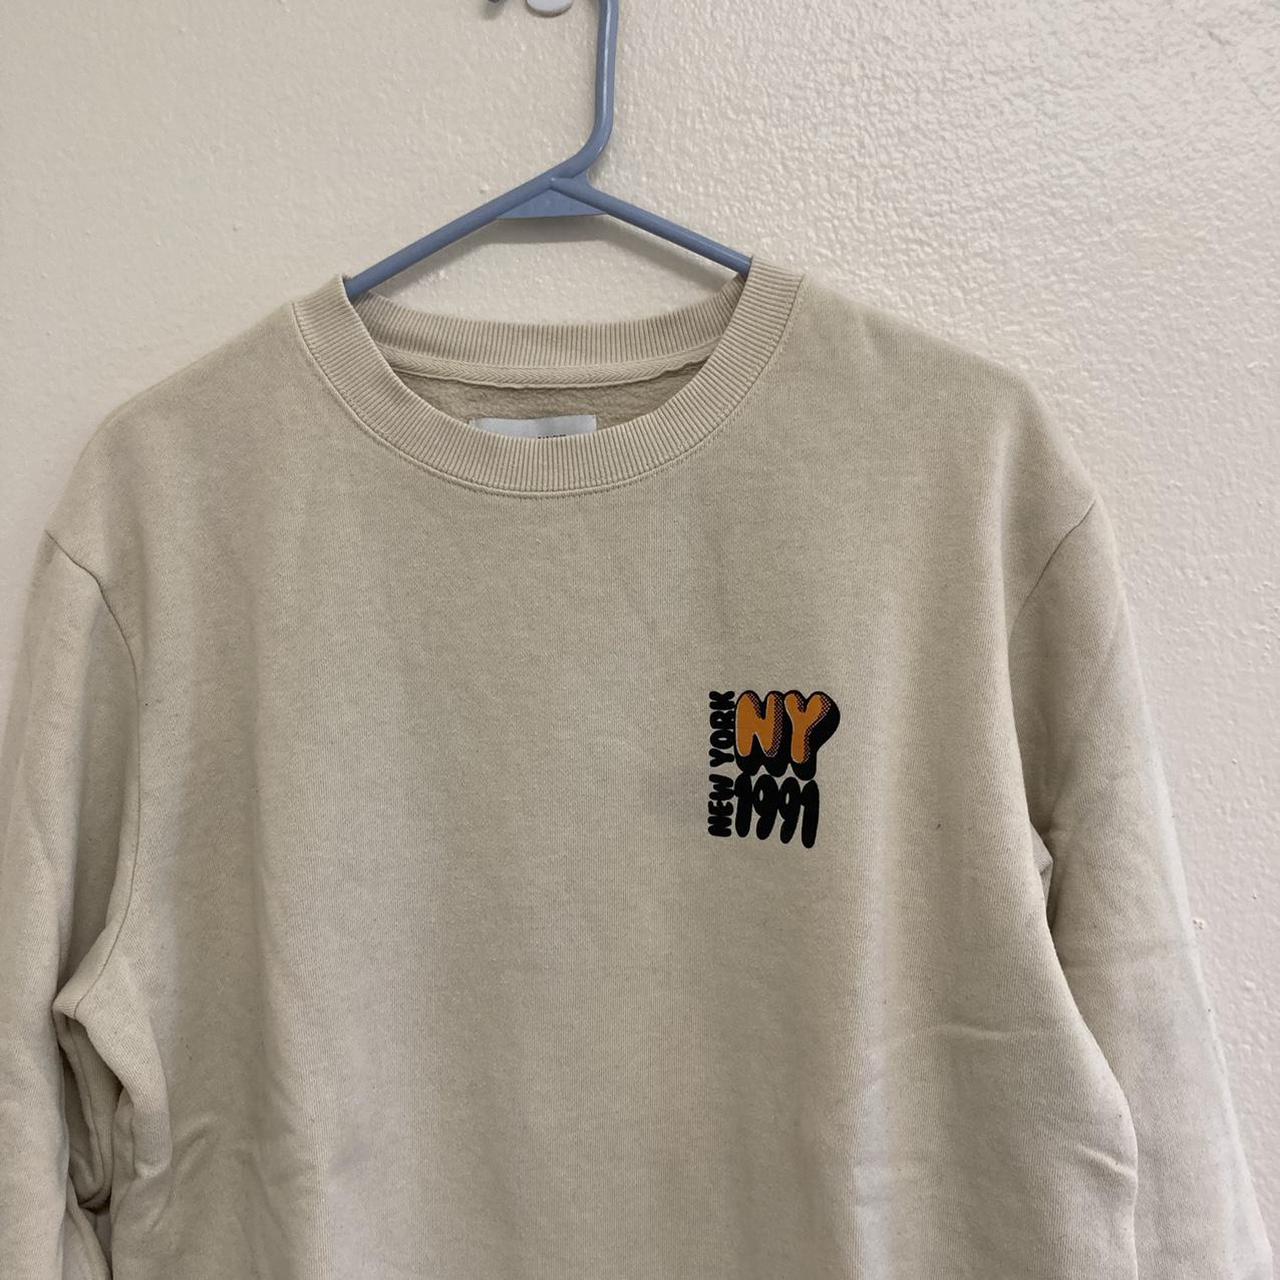 Product Image 2 - Cotton On NY Sweatshirt
• Tagged